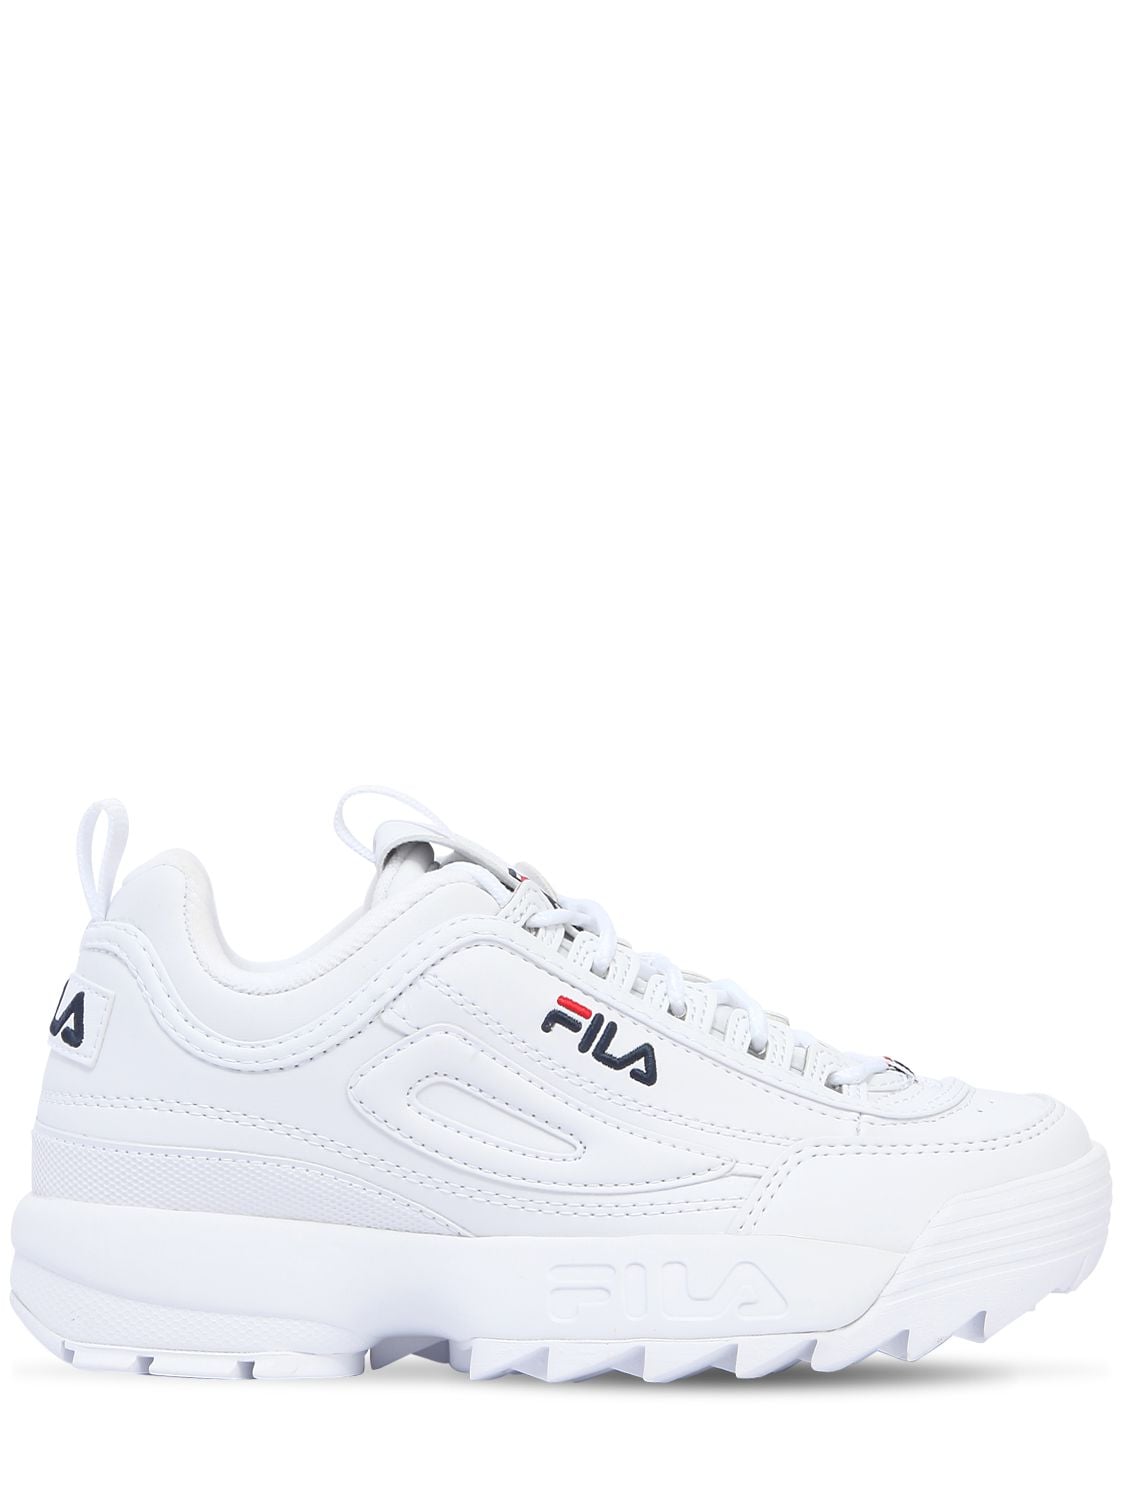 Fila Disruptor Platform Sneakers In White | ModeSens